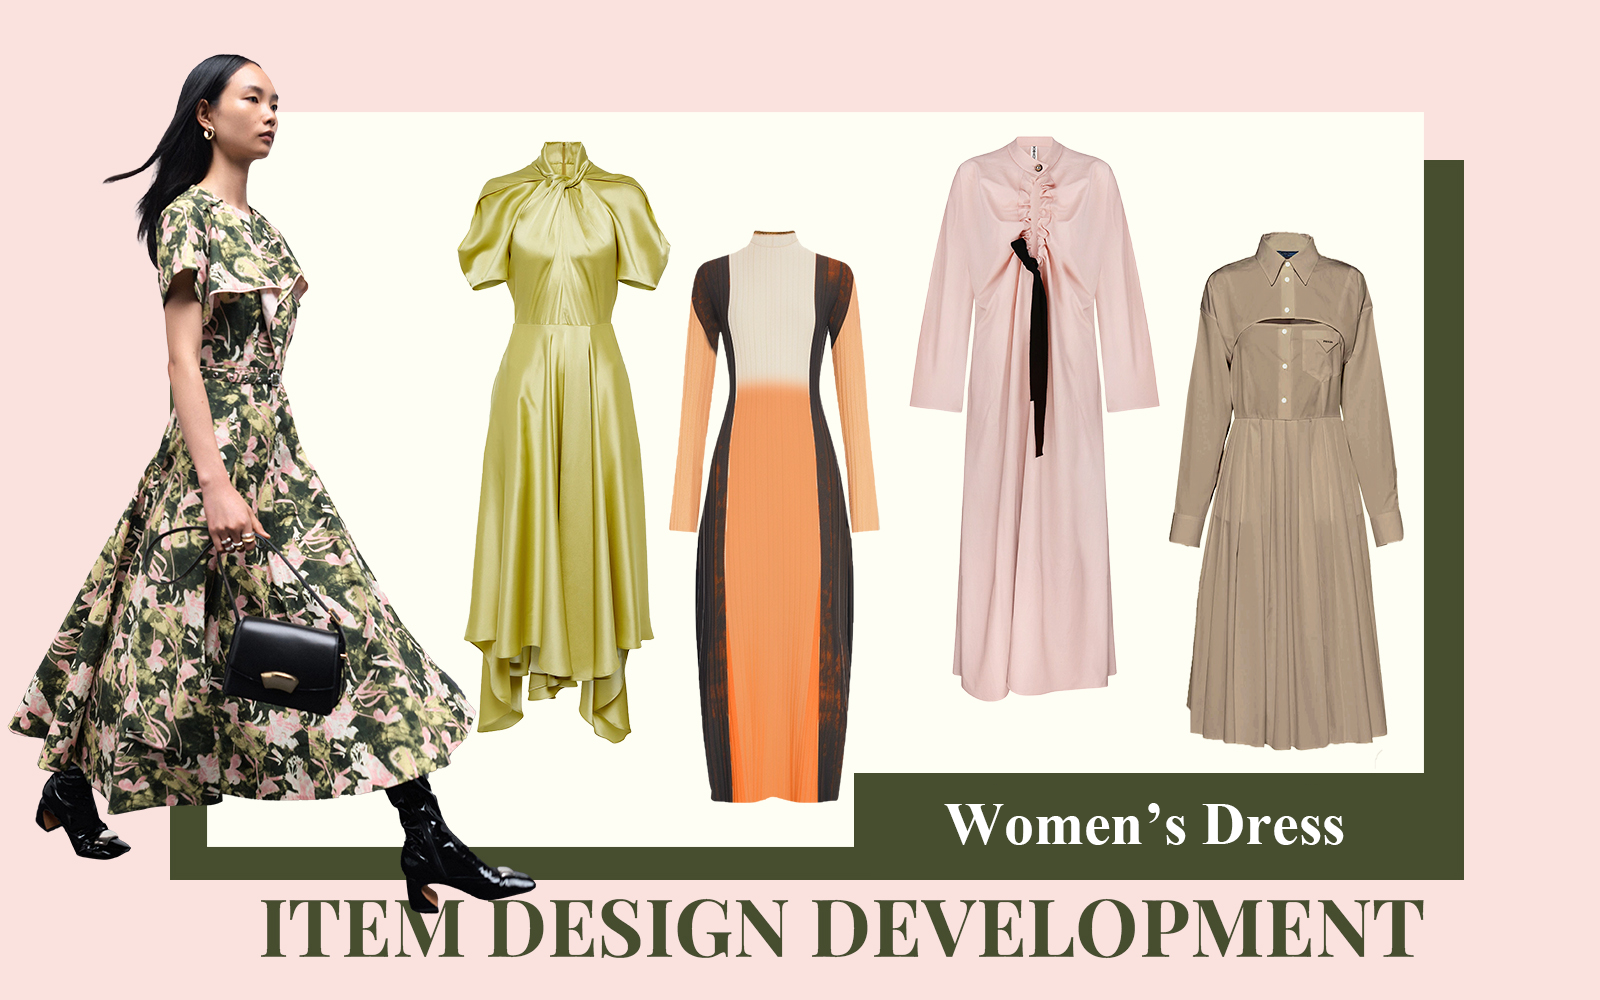 Delicate Minimalism -- The Design Development for Women's Dress